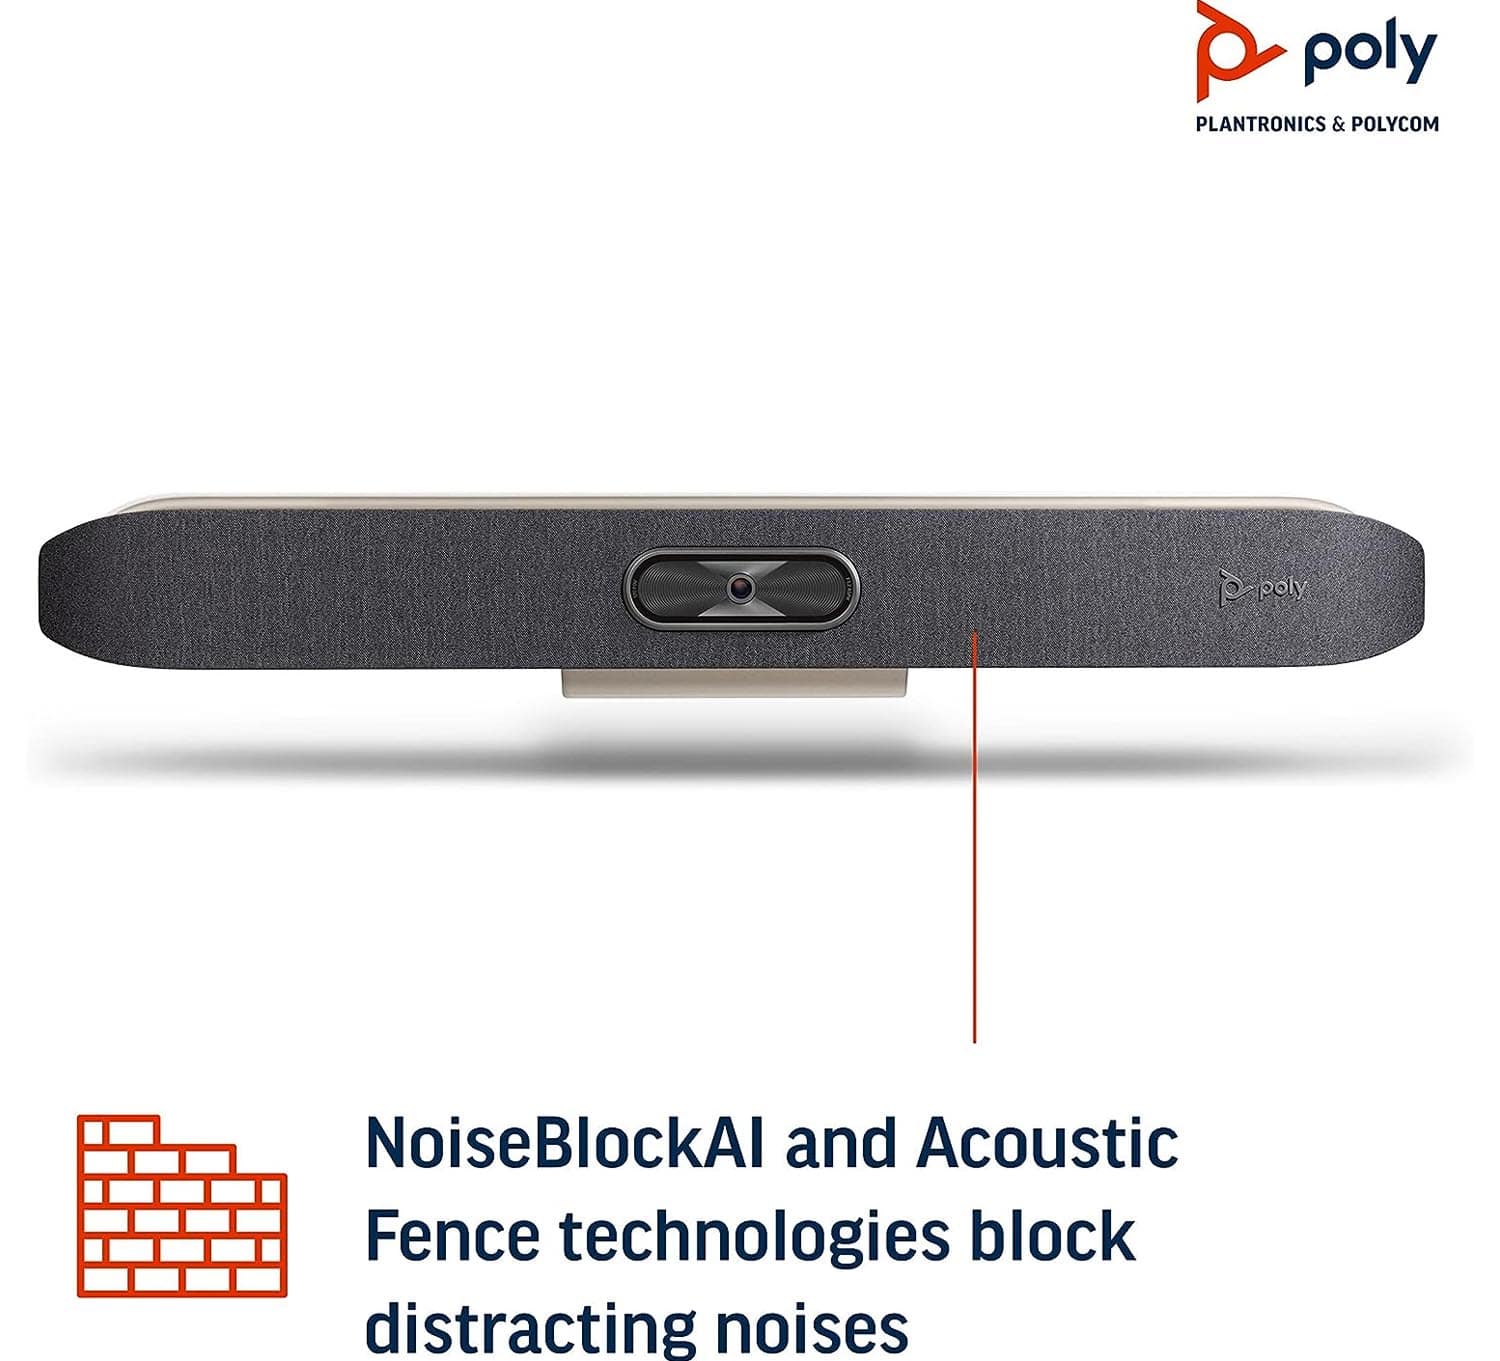 poly studio x50 with remote control là gì? (1)